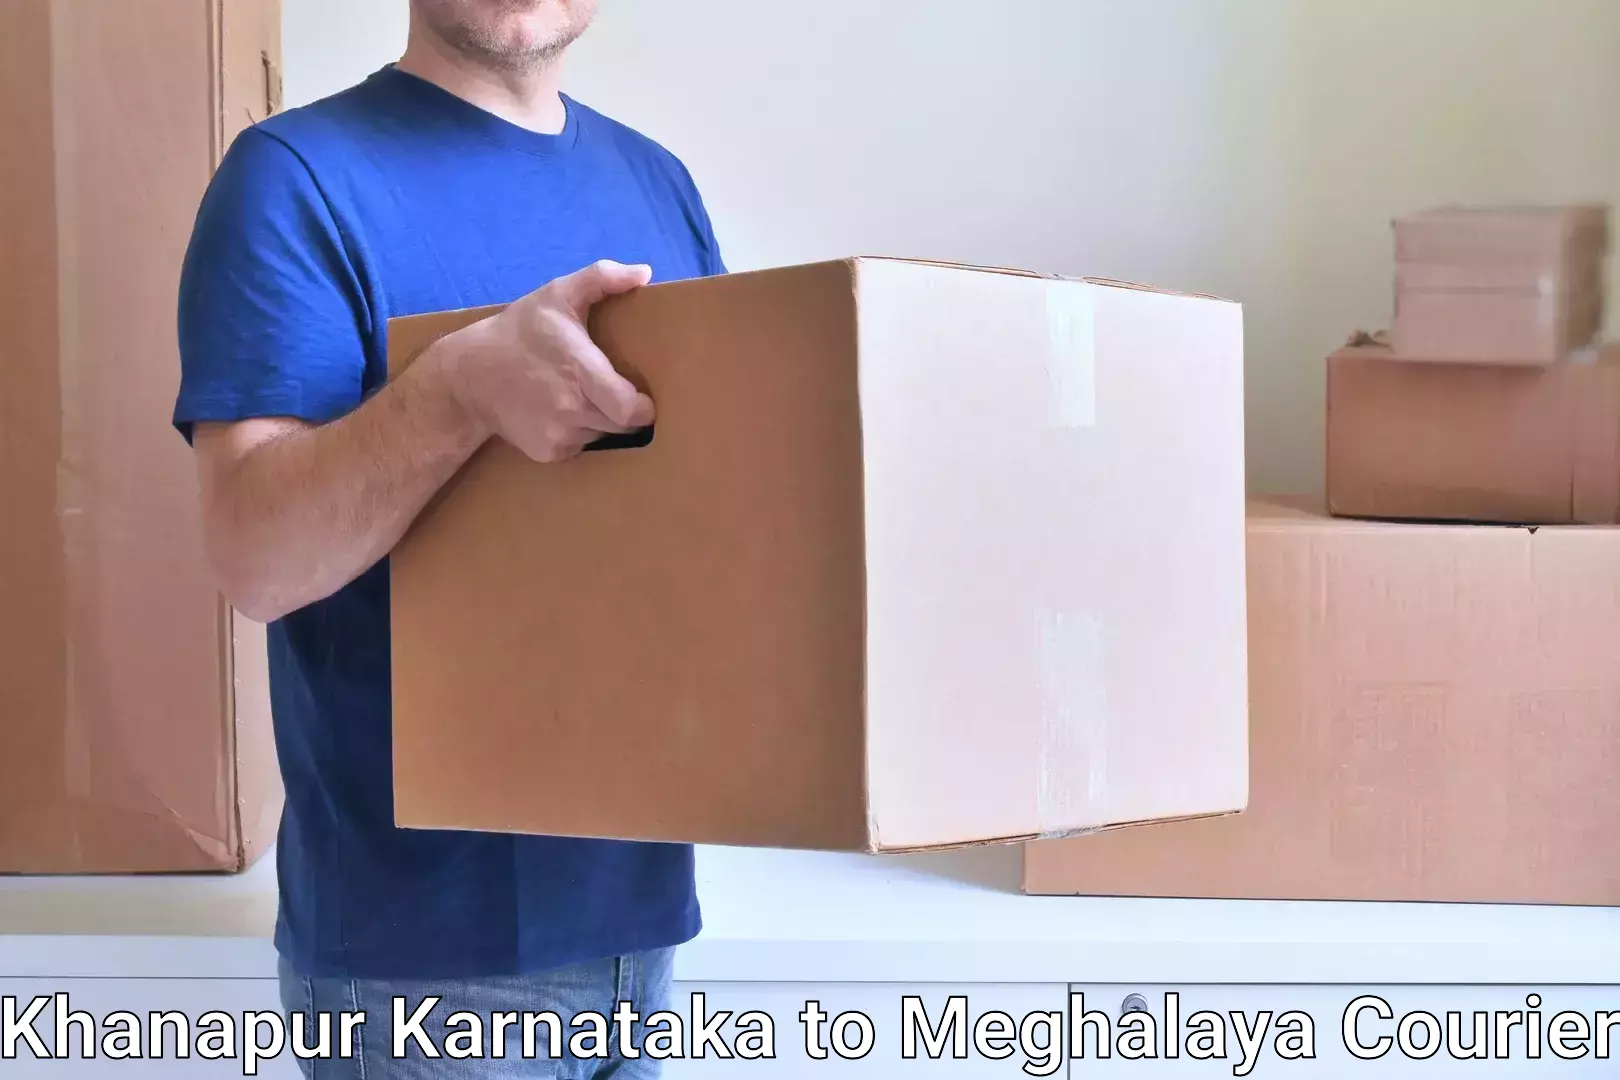 Next day courier Khanapur Karnataka to Umsaw